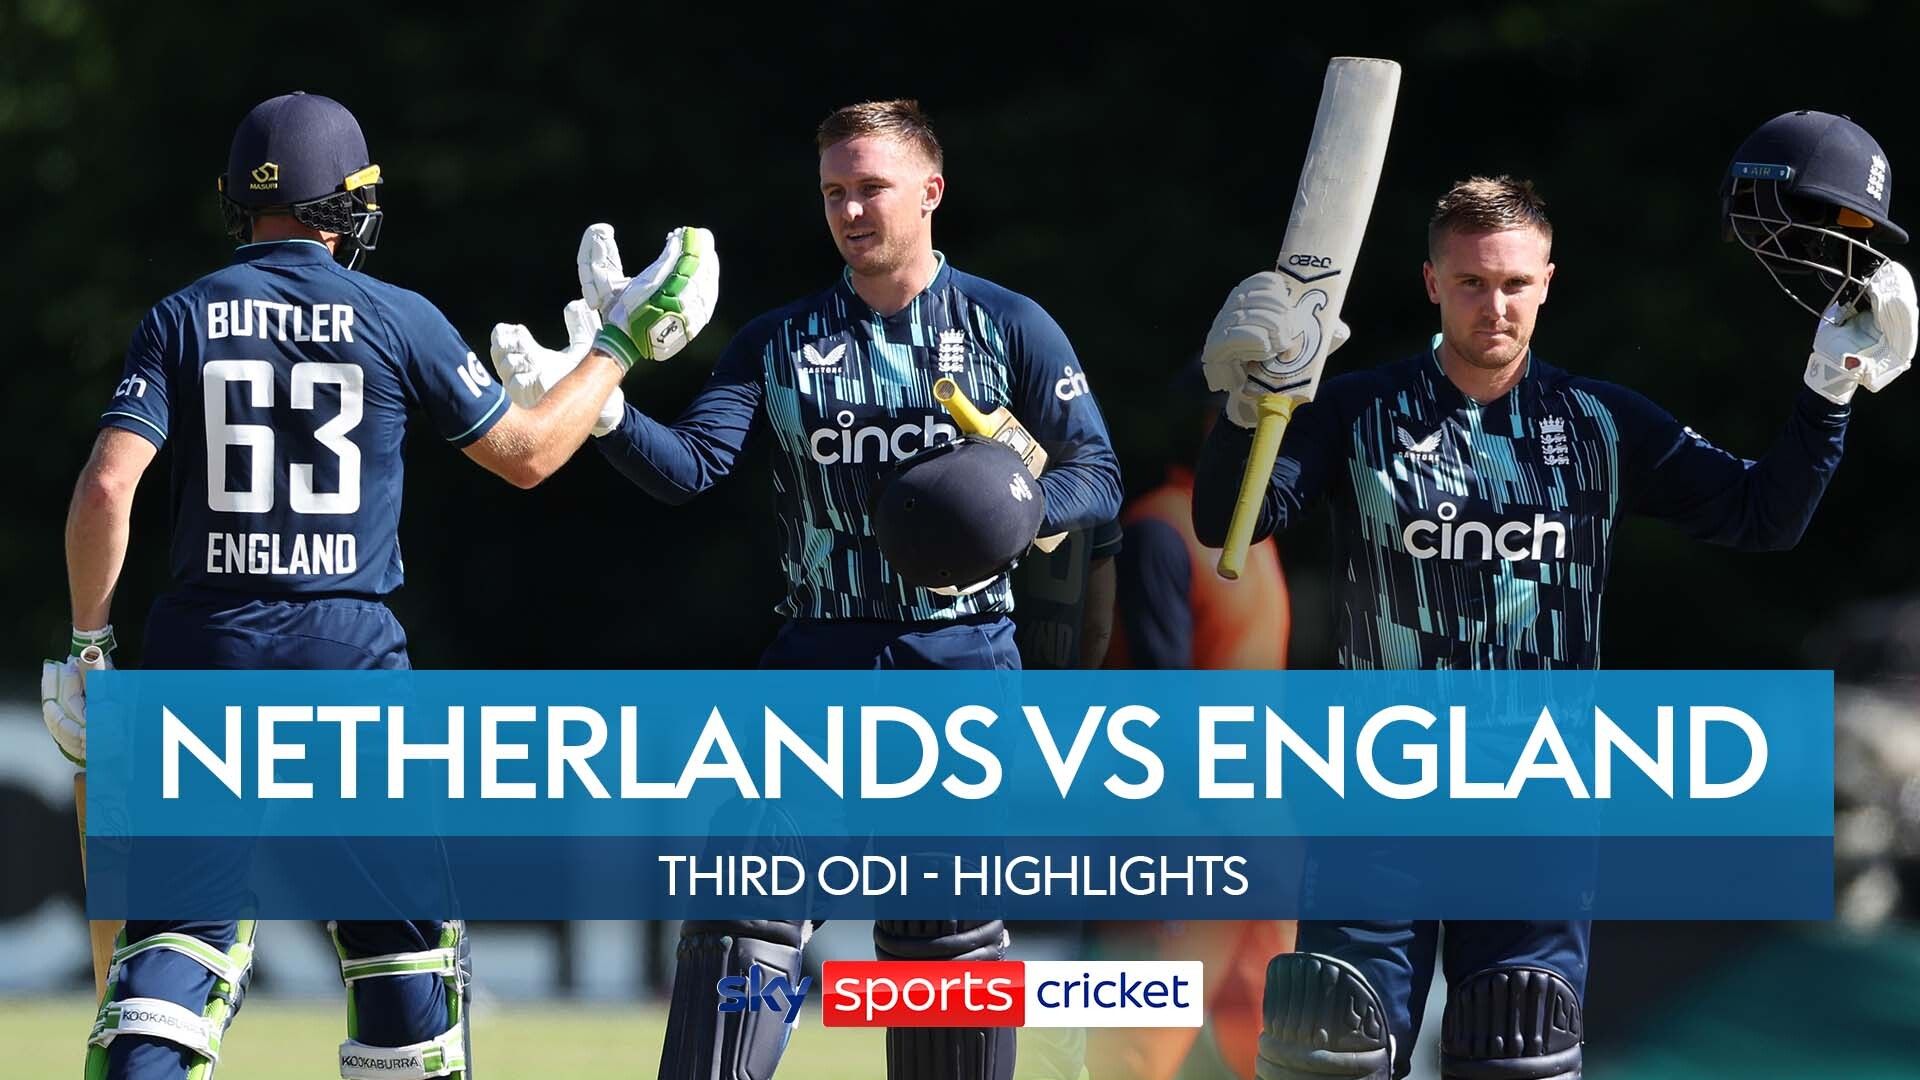 Netherlands vs England | Third ODI highlightsSkySports | Information